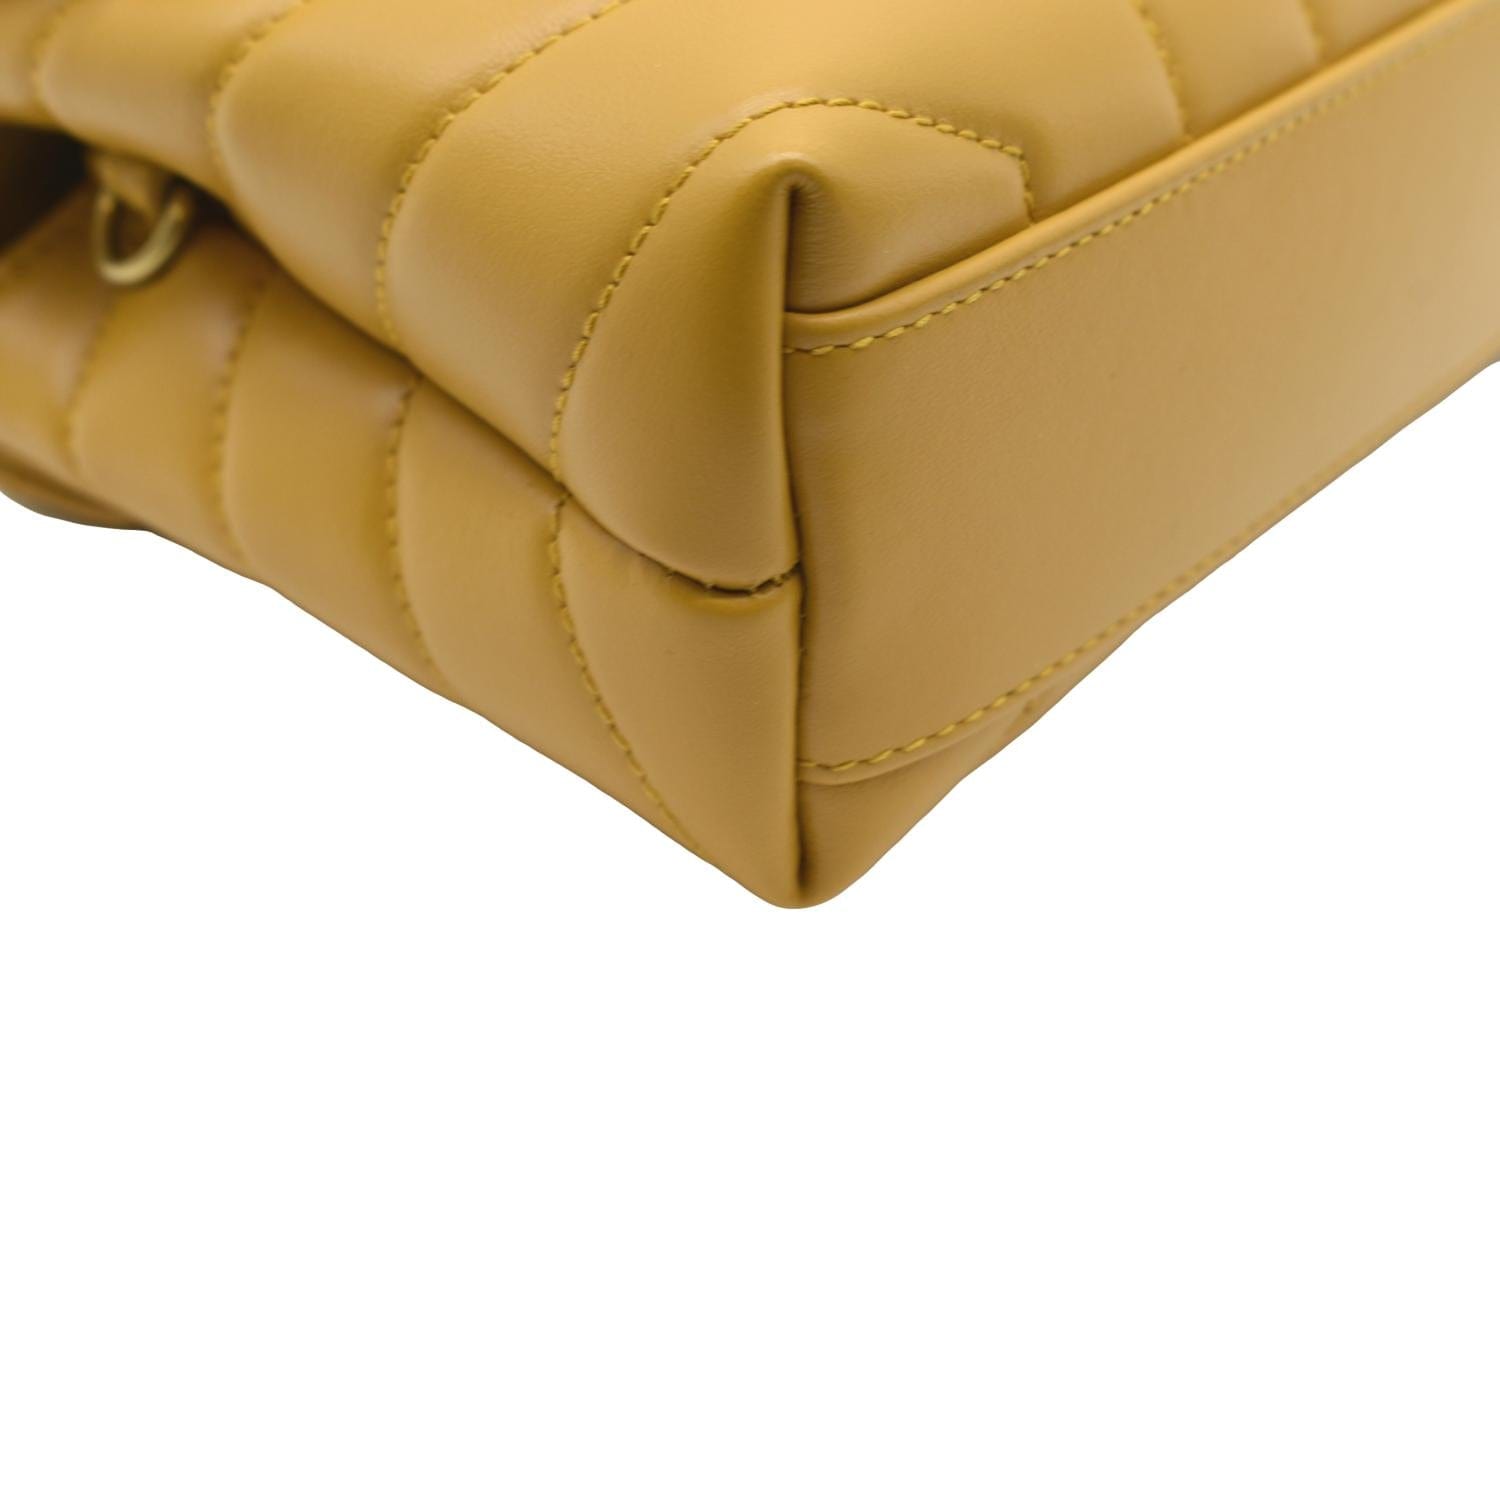 Saint Laurent Ladies Loulou Mini Crossbody Bag 612579 1GF01 9207  3615091864430 - Handbags - Jomashop